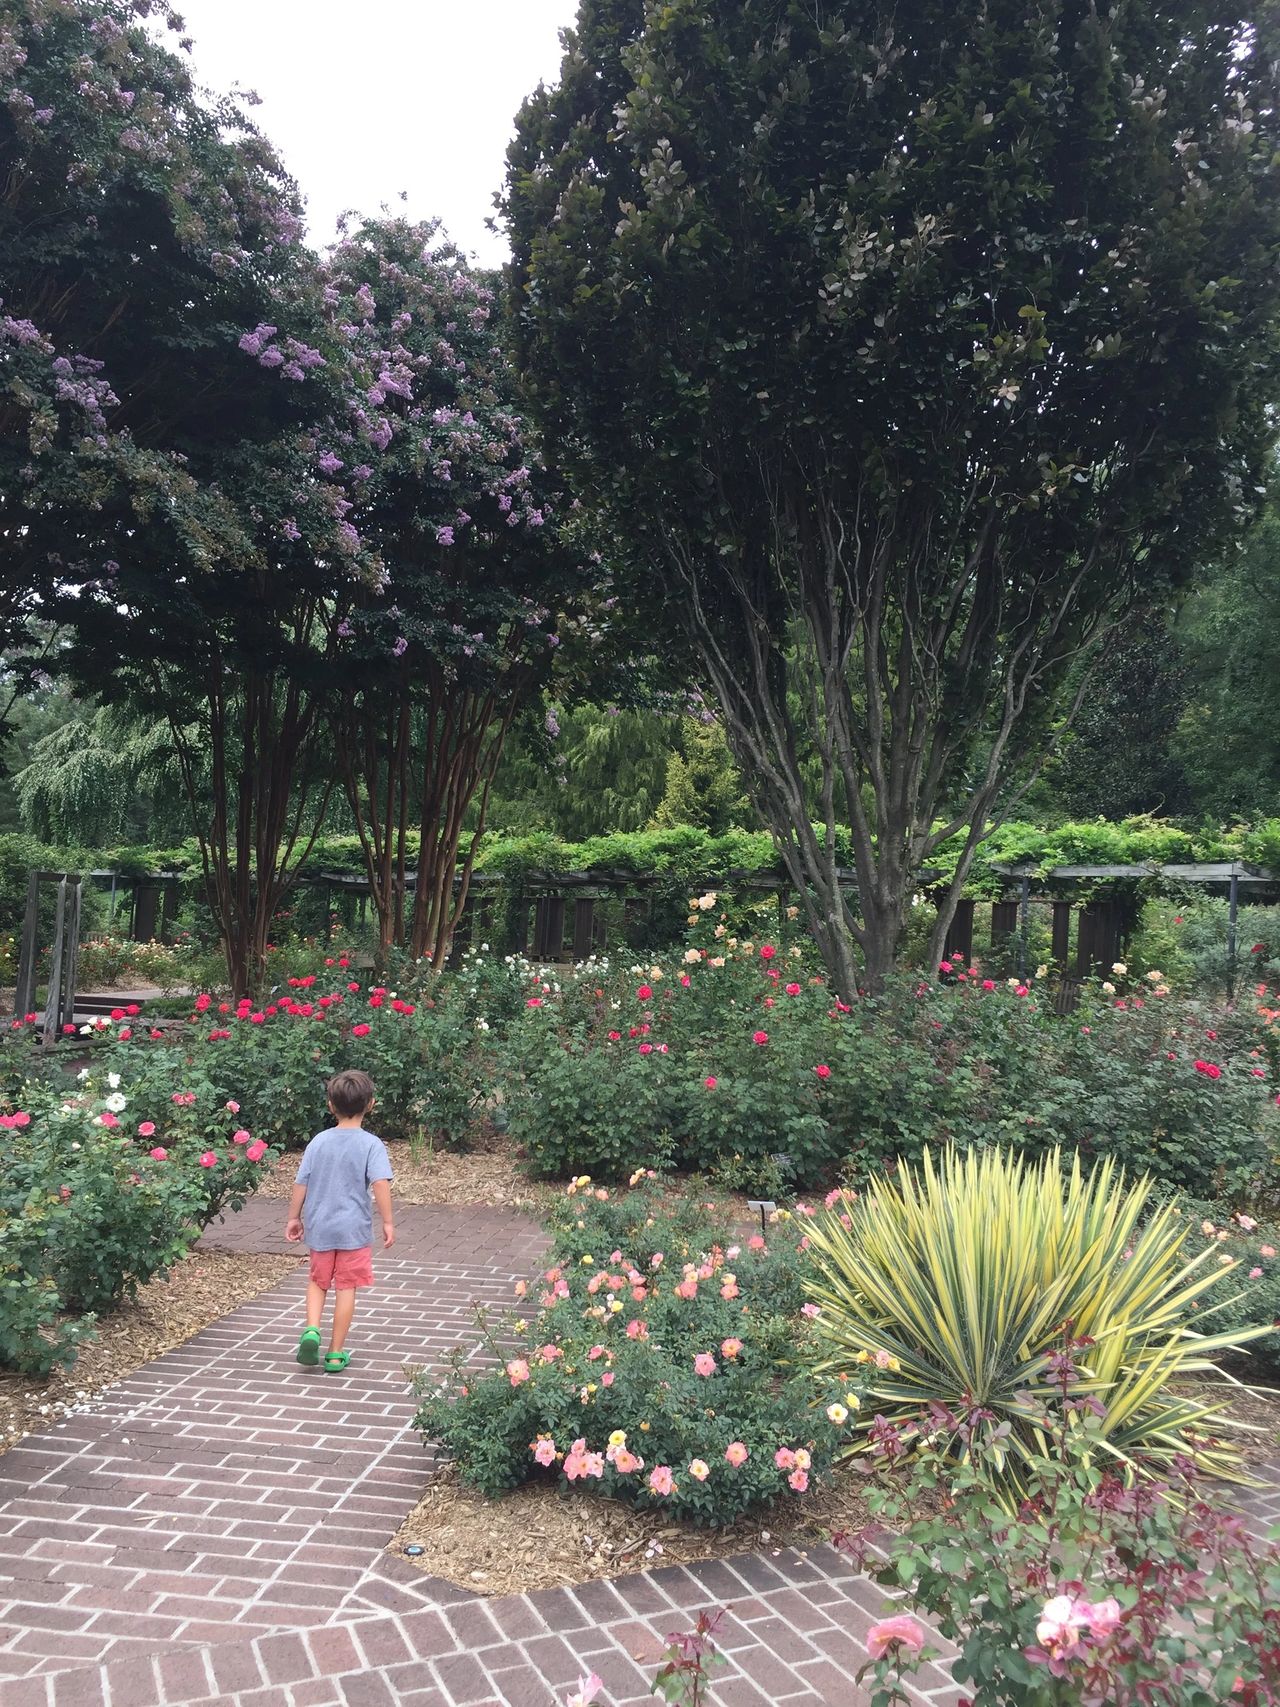 Little boy walking through garden